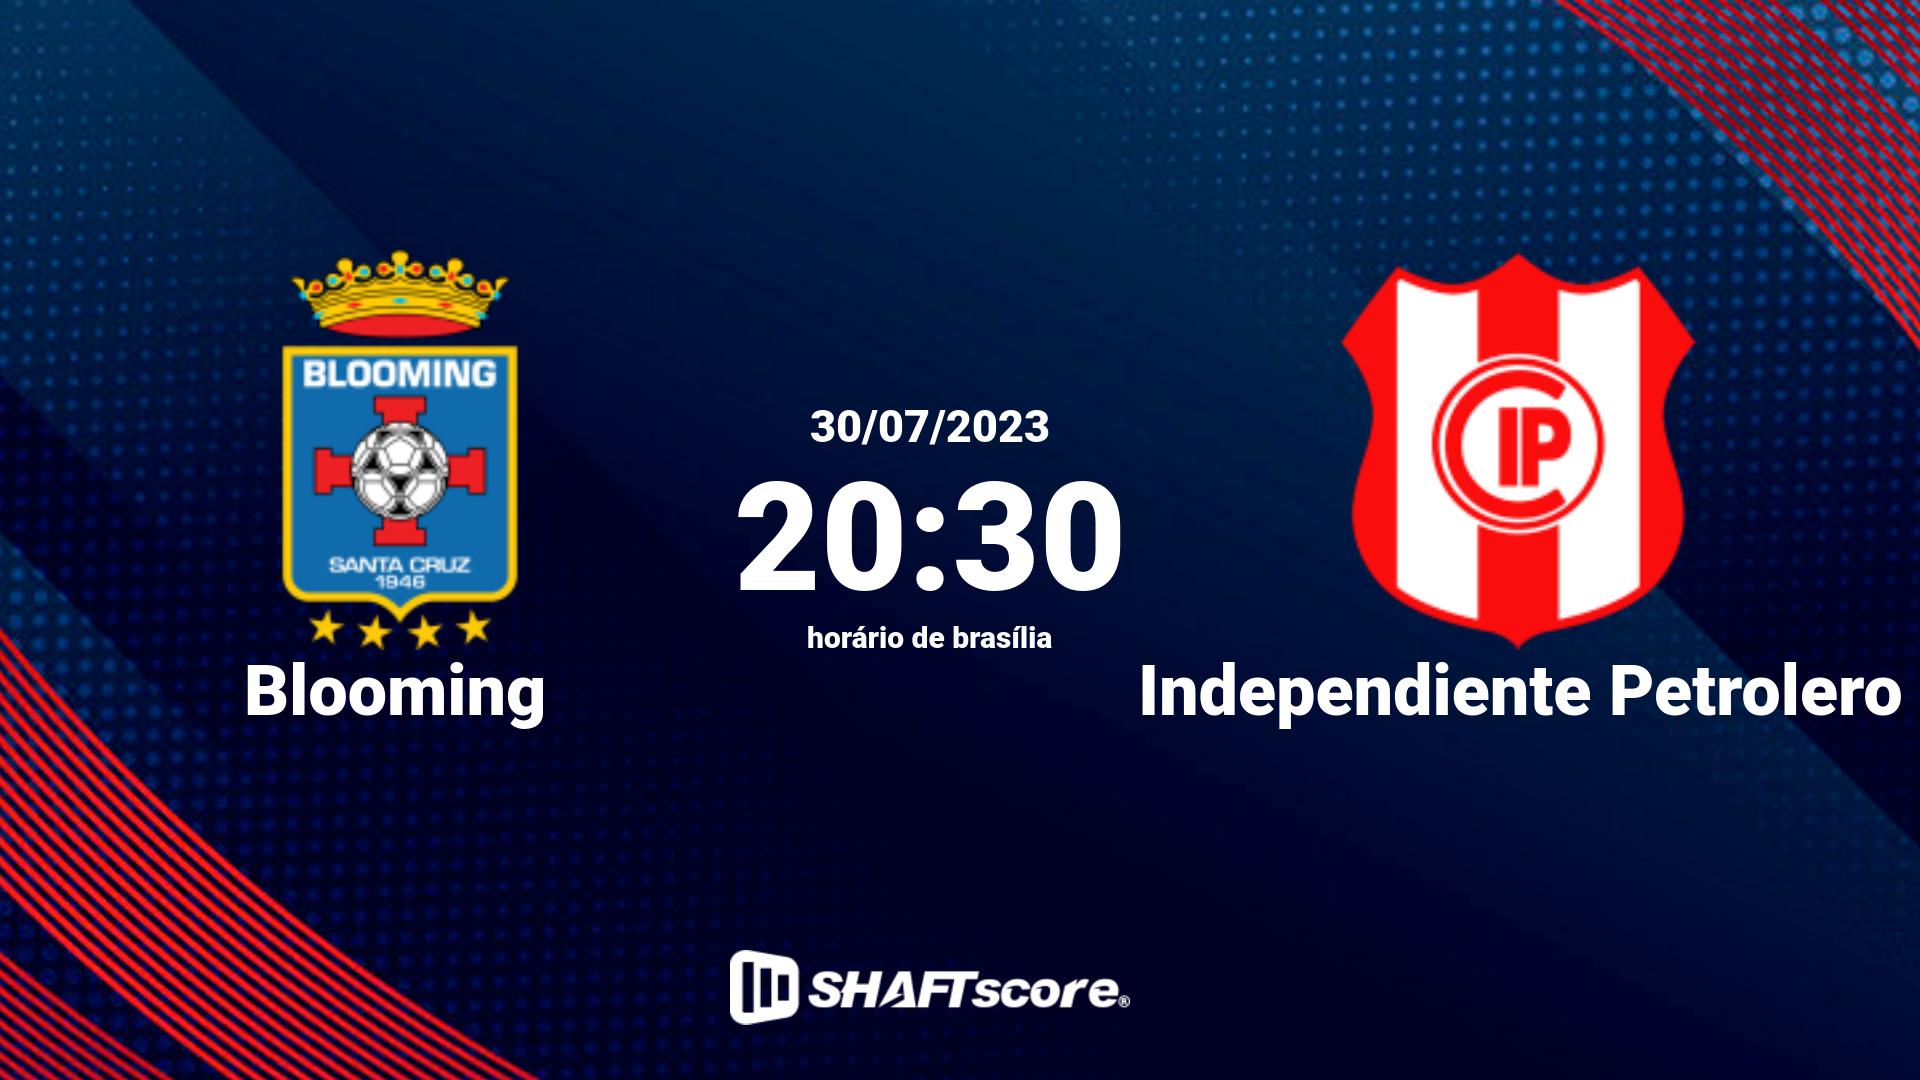 Estatísticas do jogo Blooming vs Independiente Petrolero 30.07 20:30